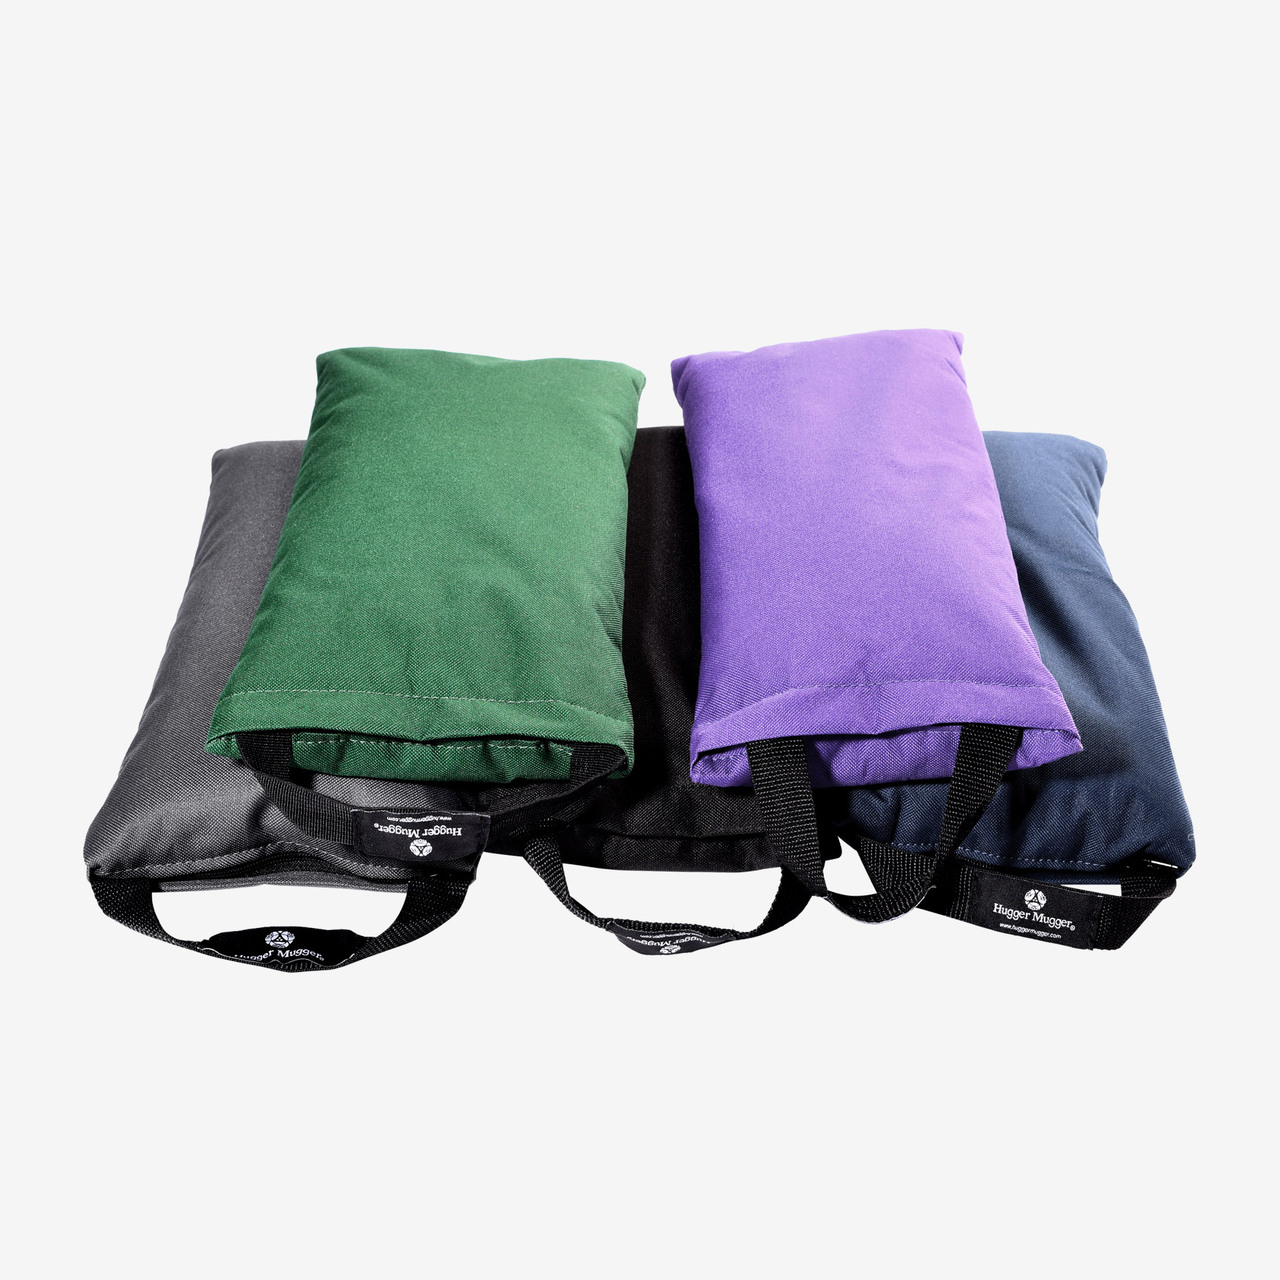 YogaPro Duffel Bag/Backpack - Hugger Mugger